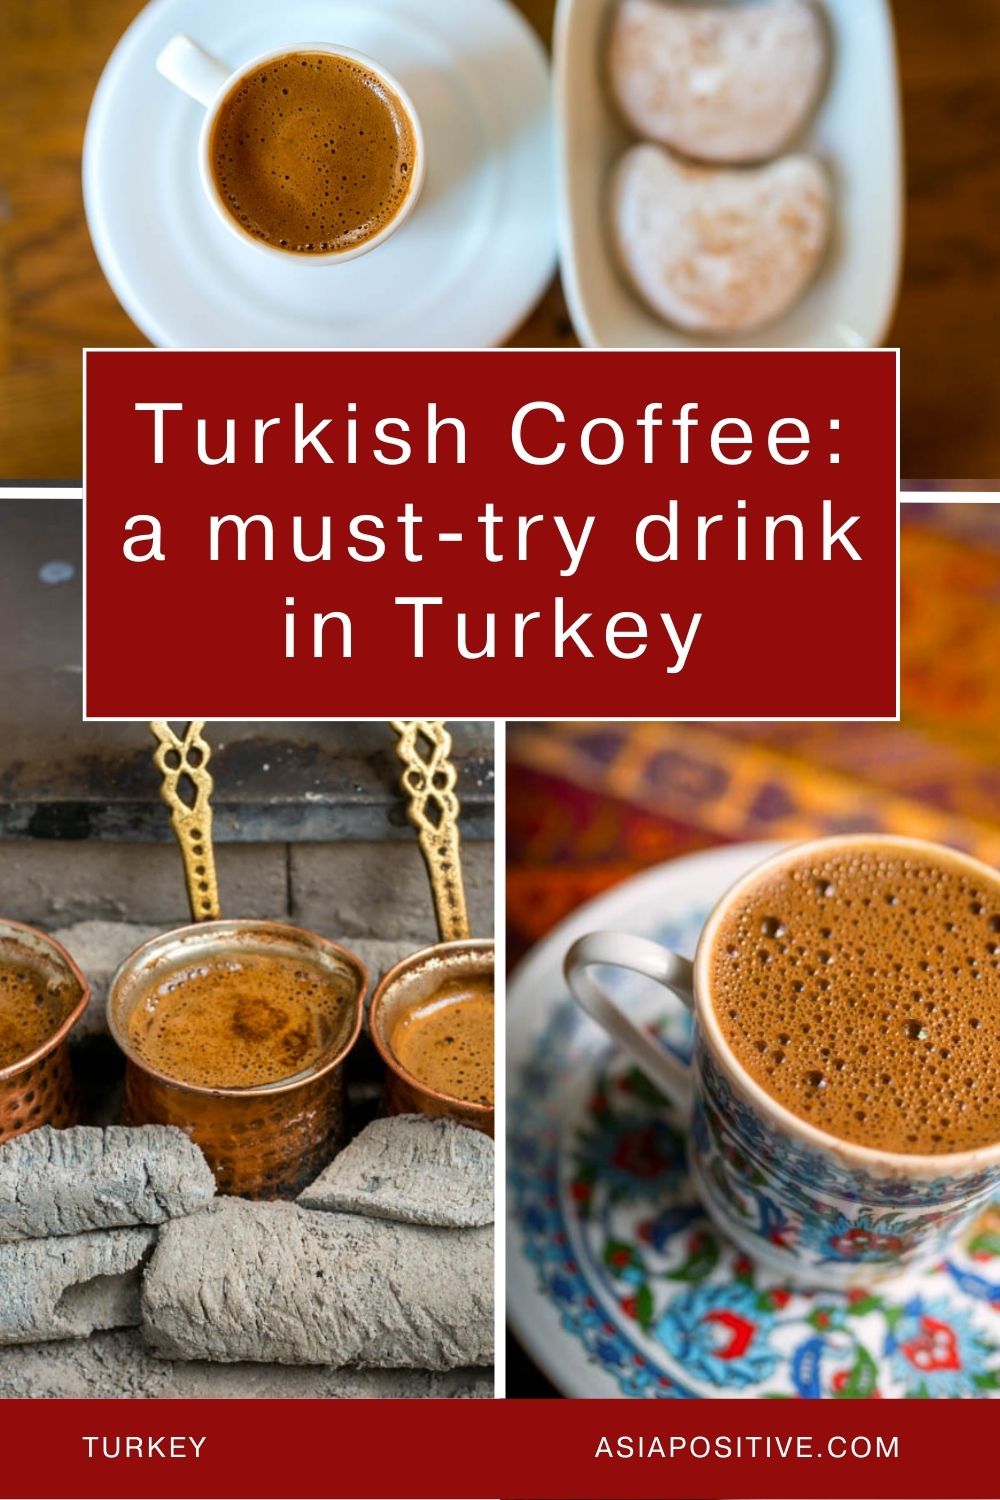 Turkish Coffee: a must-try drink in Turkey